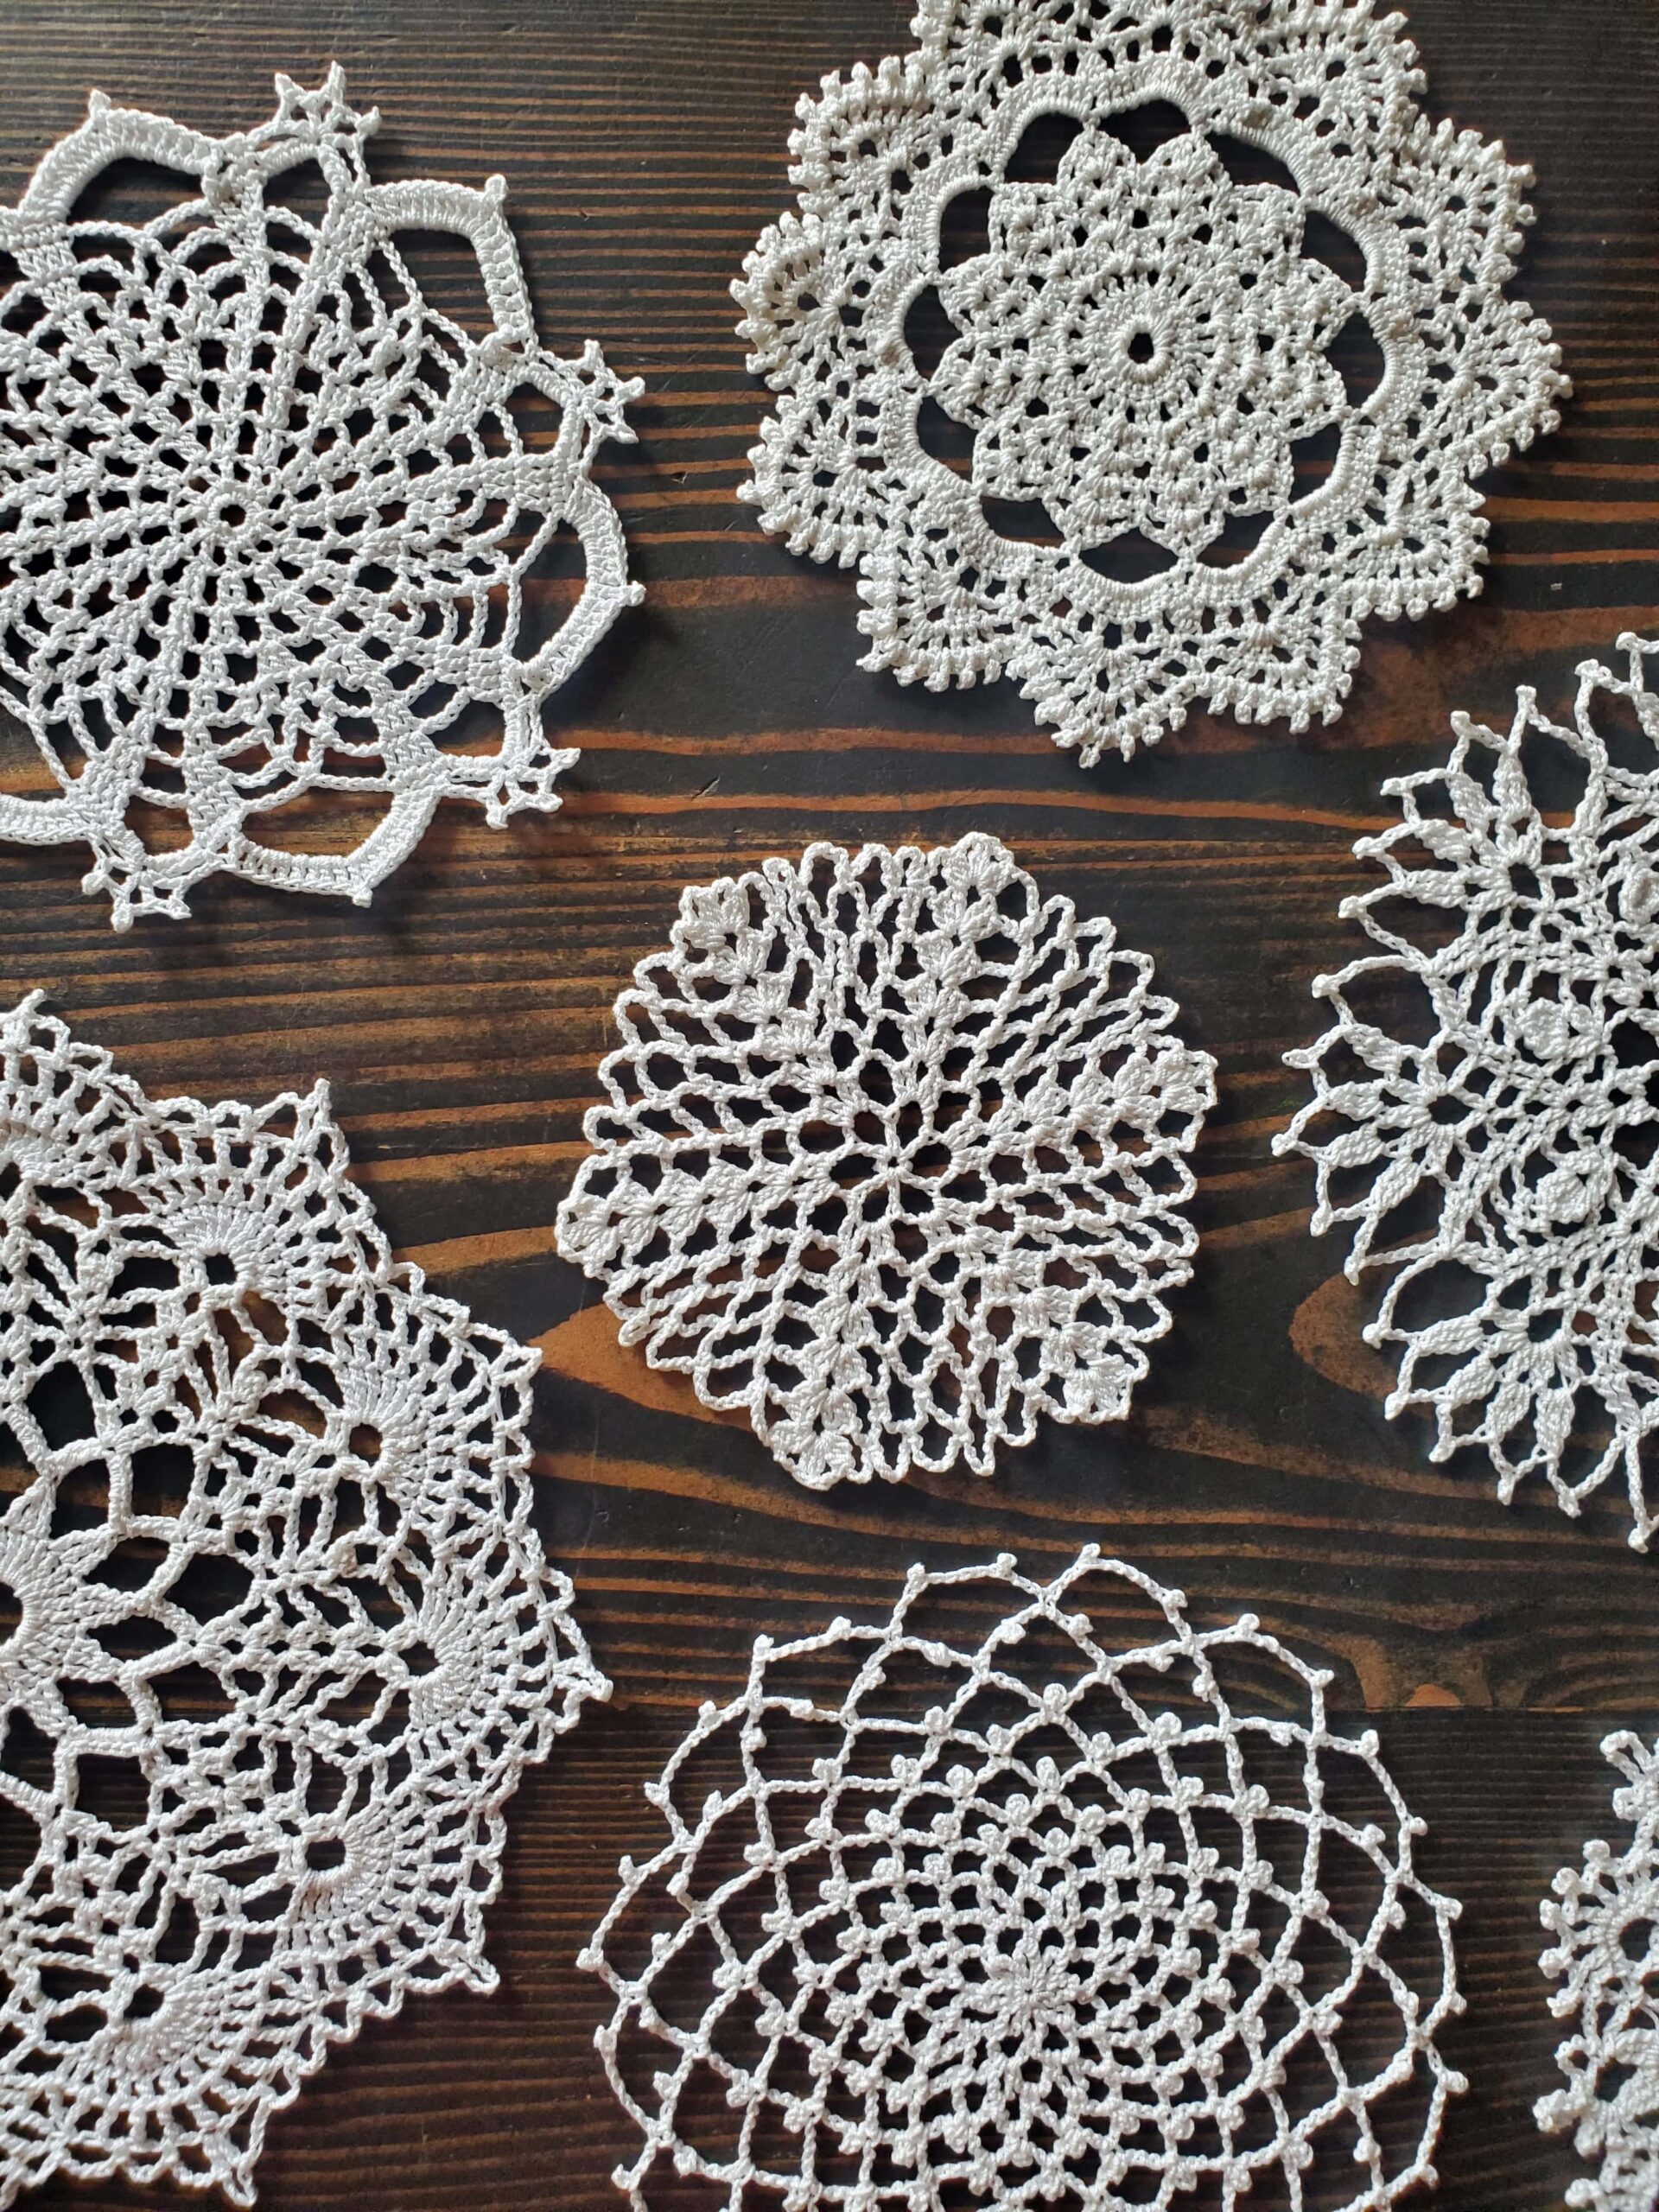 15 Small Crochet Doily Patterns